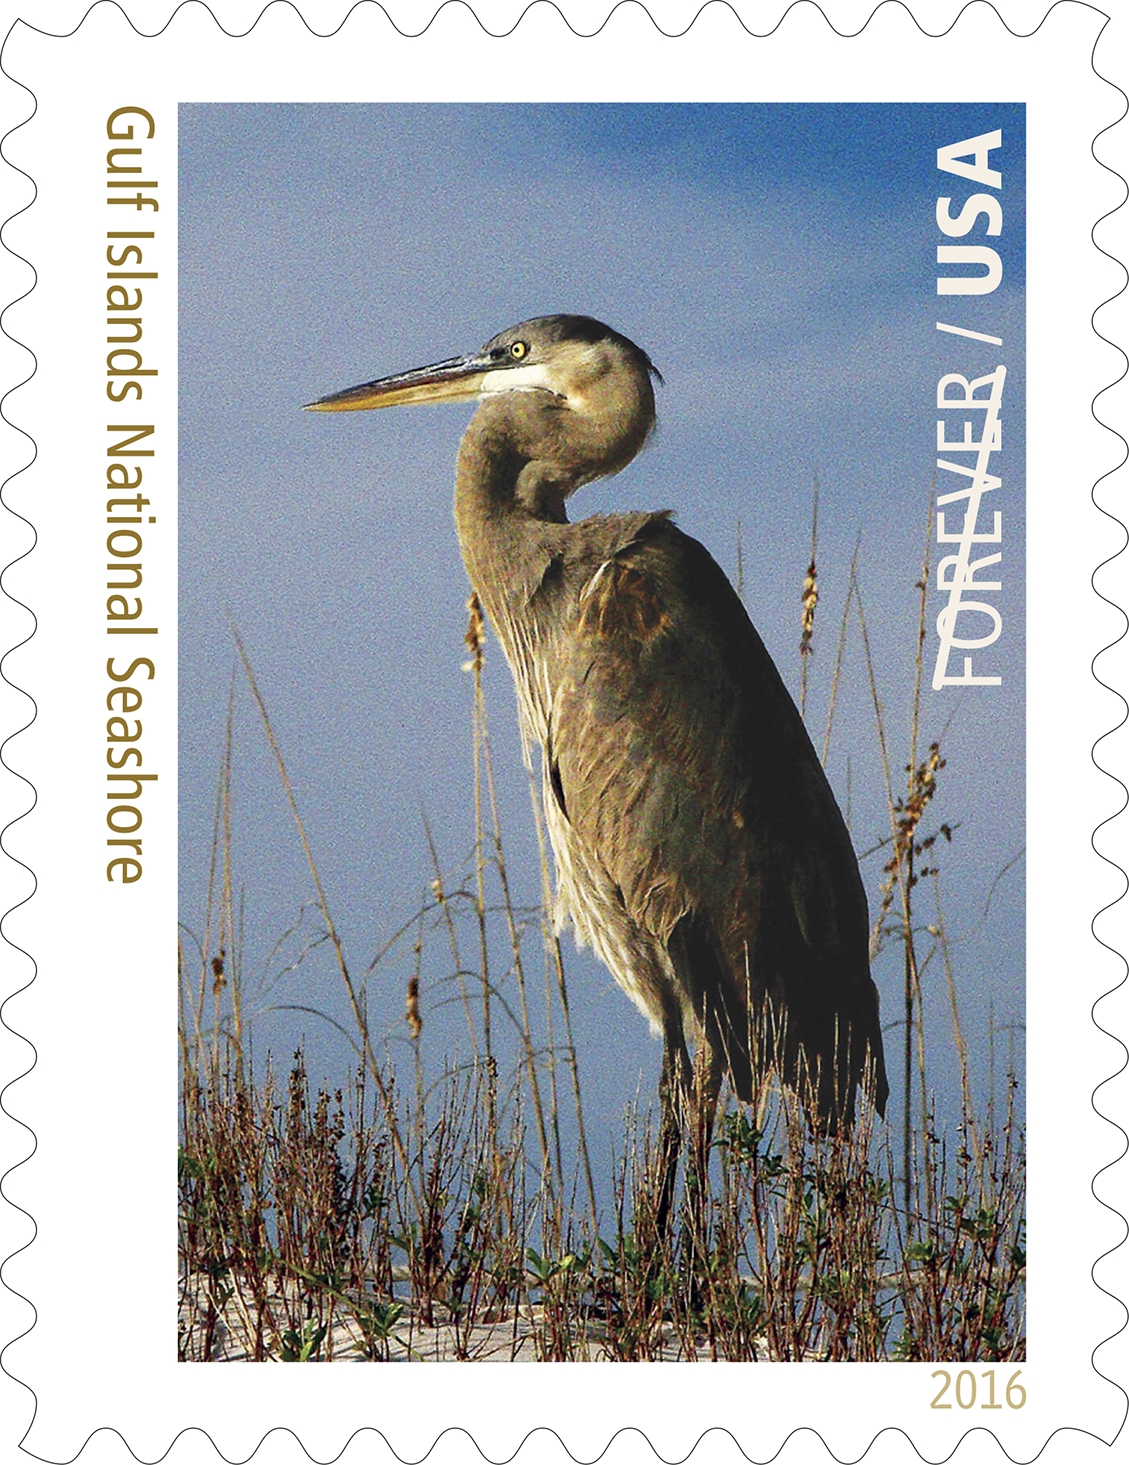 Gulf Island National Seashore stamp released